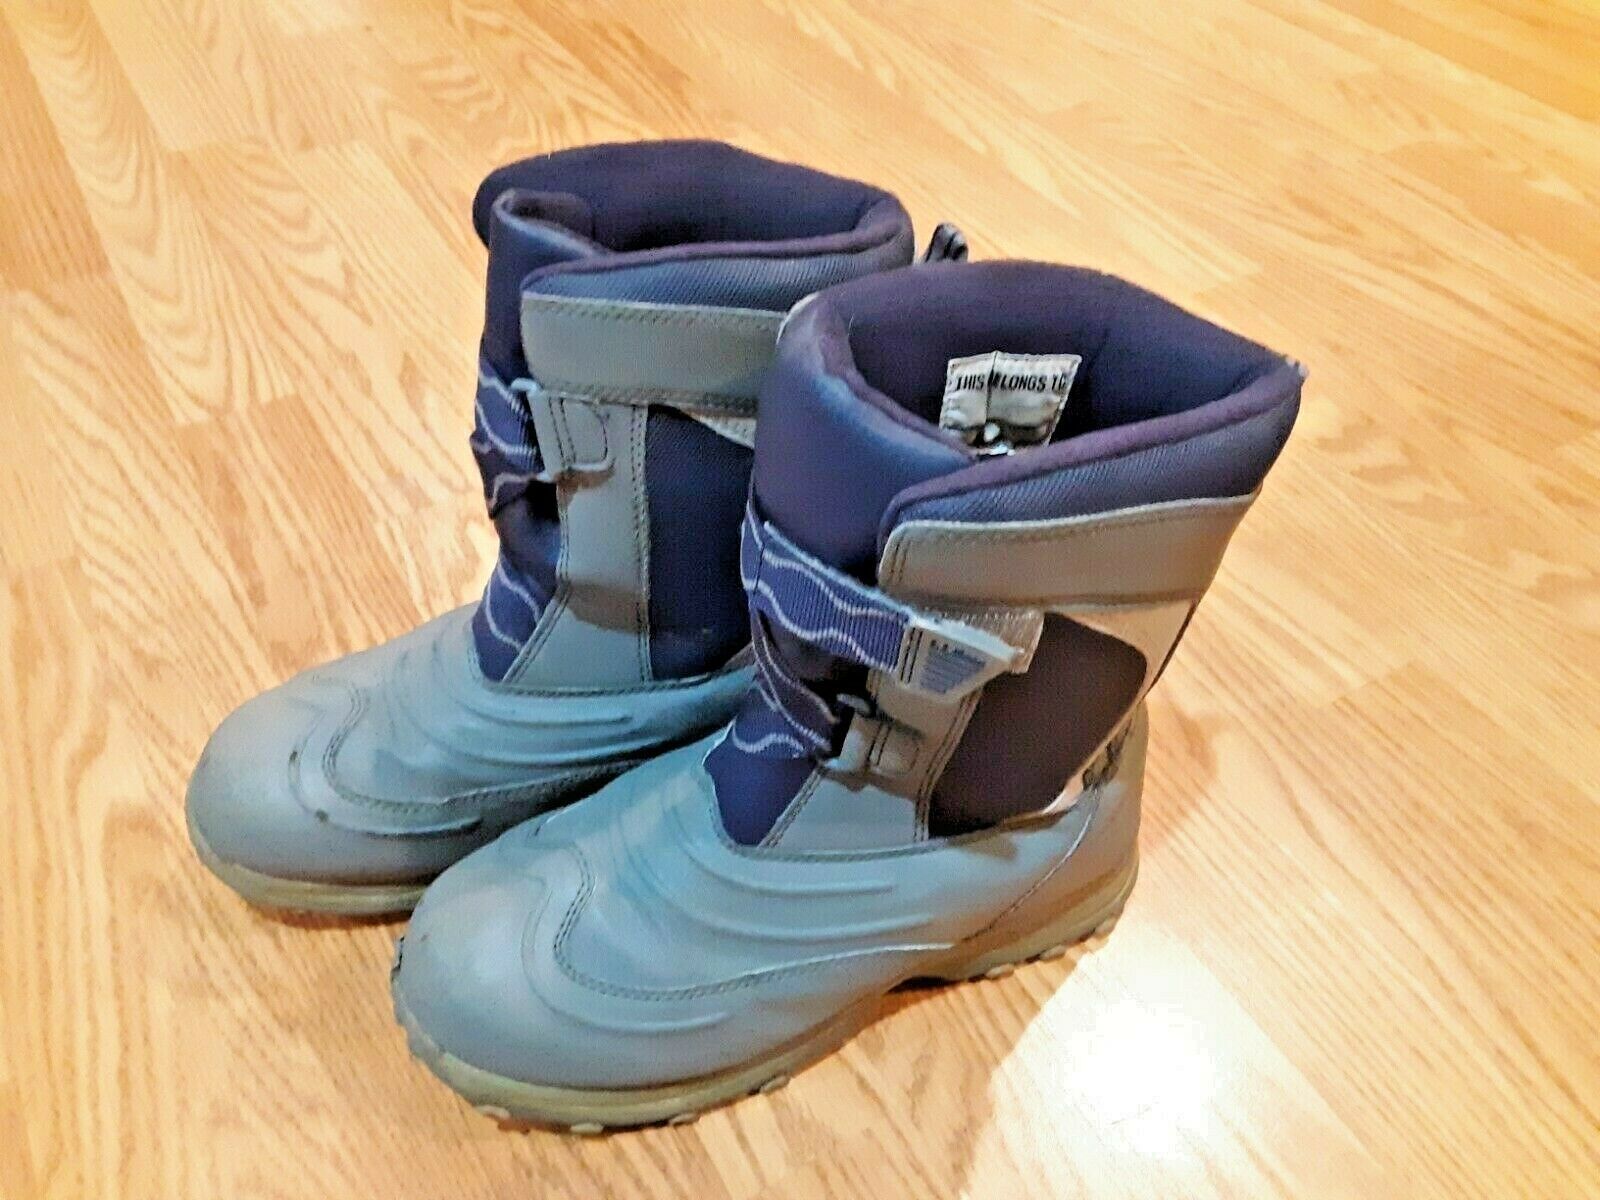 LL Bean Kids Size 6 Snow Tread Winter Boots Black Grey - $23.75